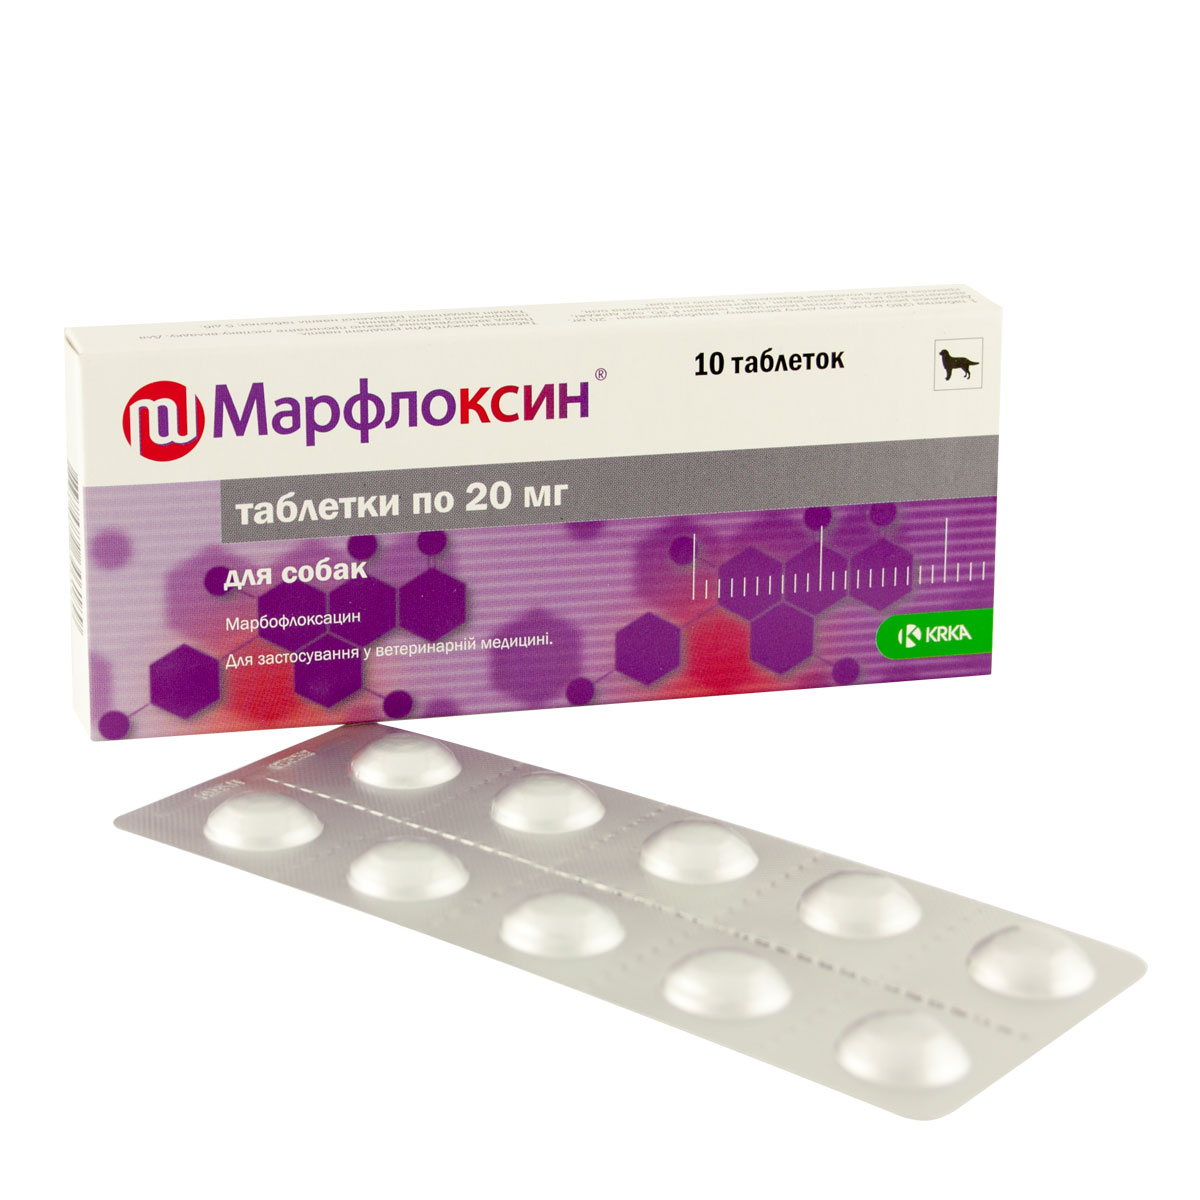 Марфлоксин №10 таблетки 5мг., KRKA от зоомагазина Дино Зоо